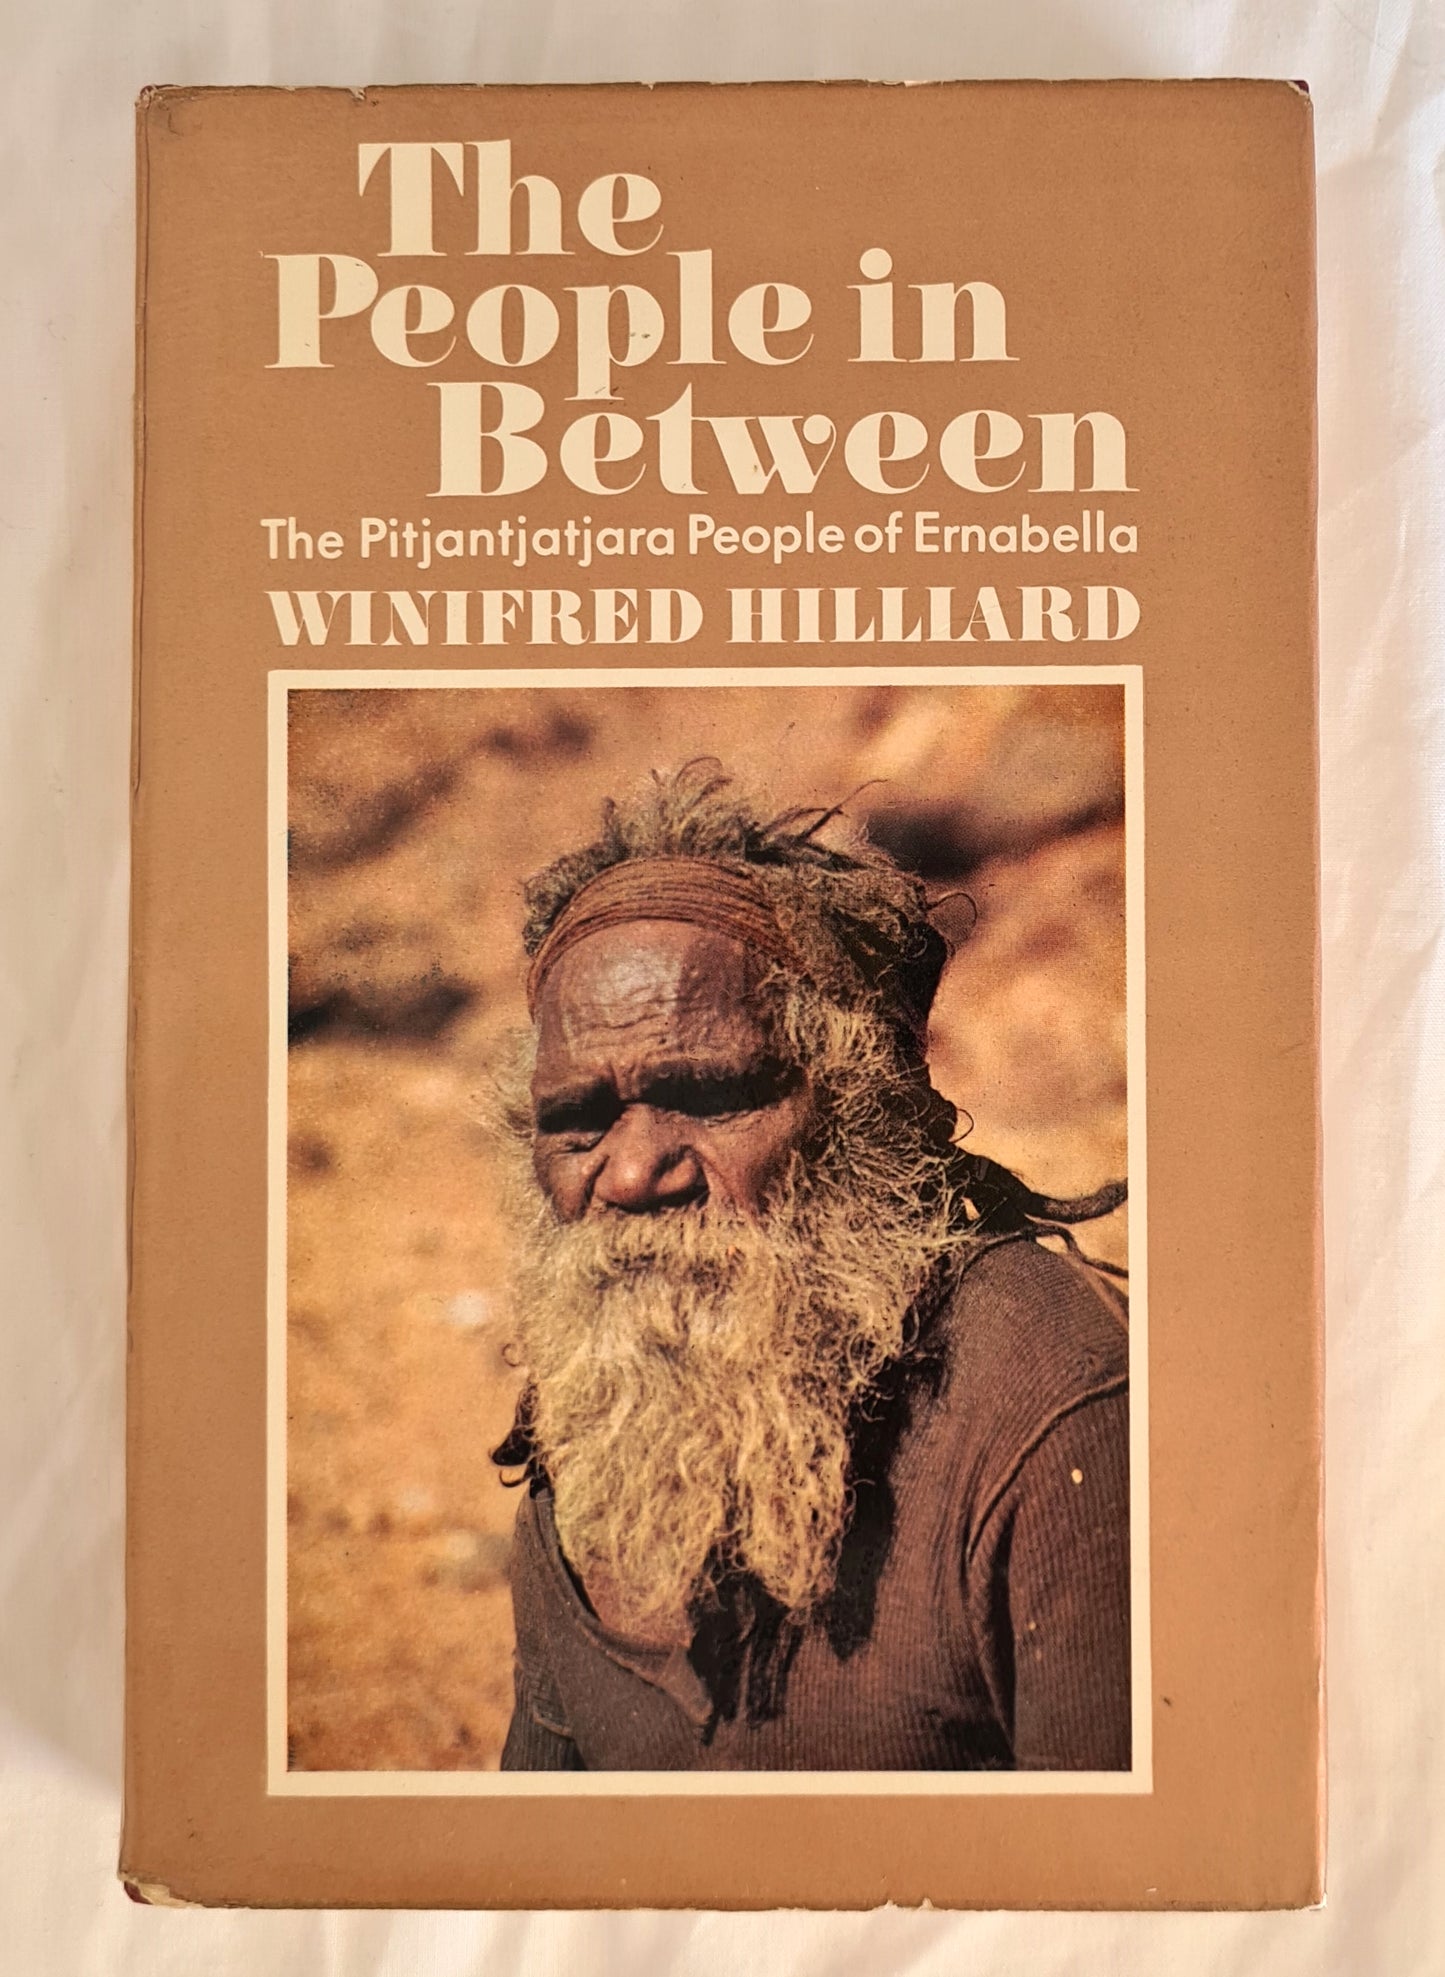 The People In Between  The Pitjantjatjara People of Ernabella  by Winifred Hilliard